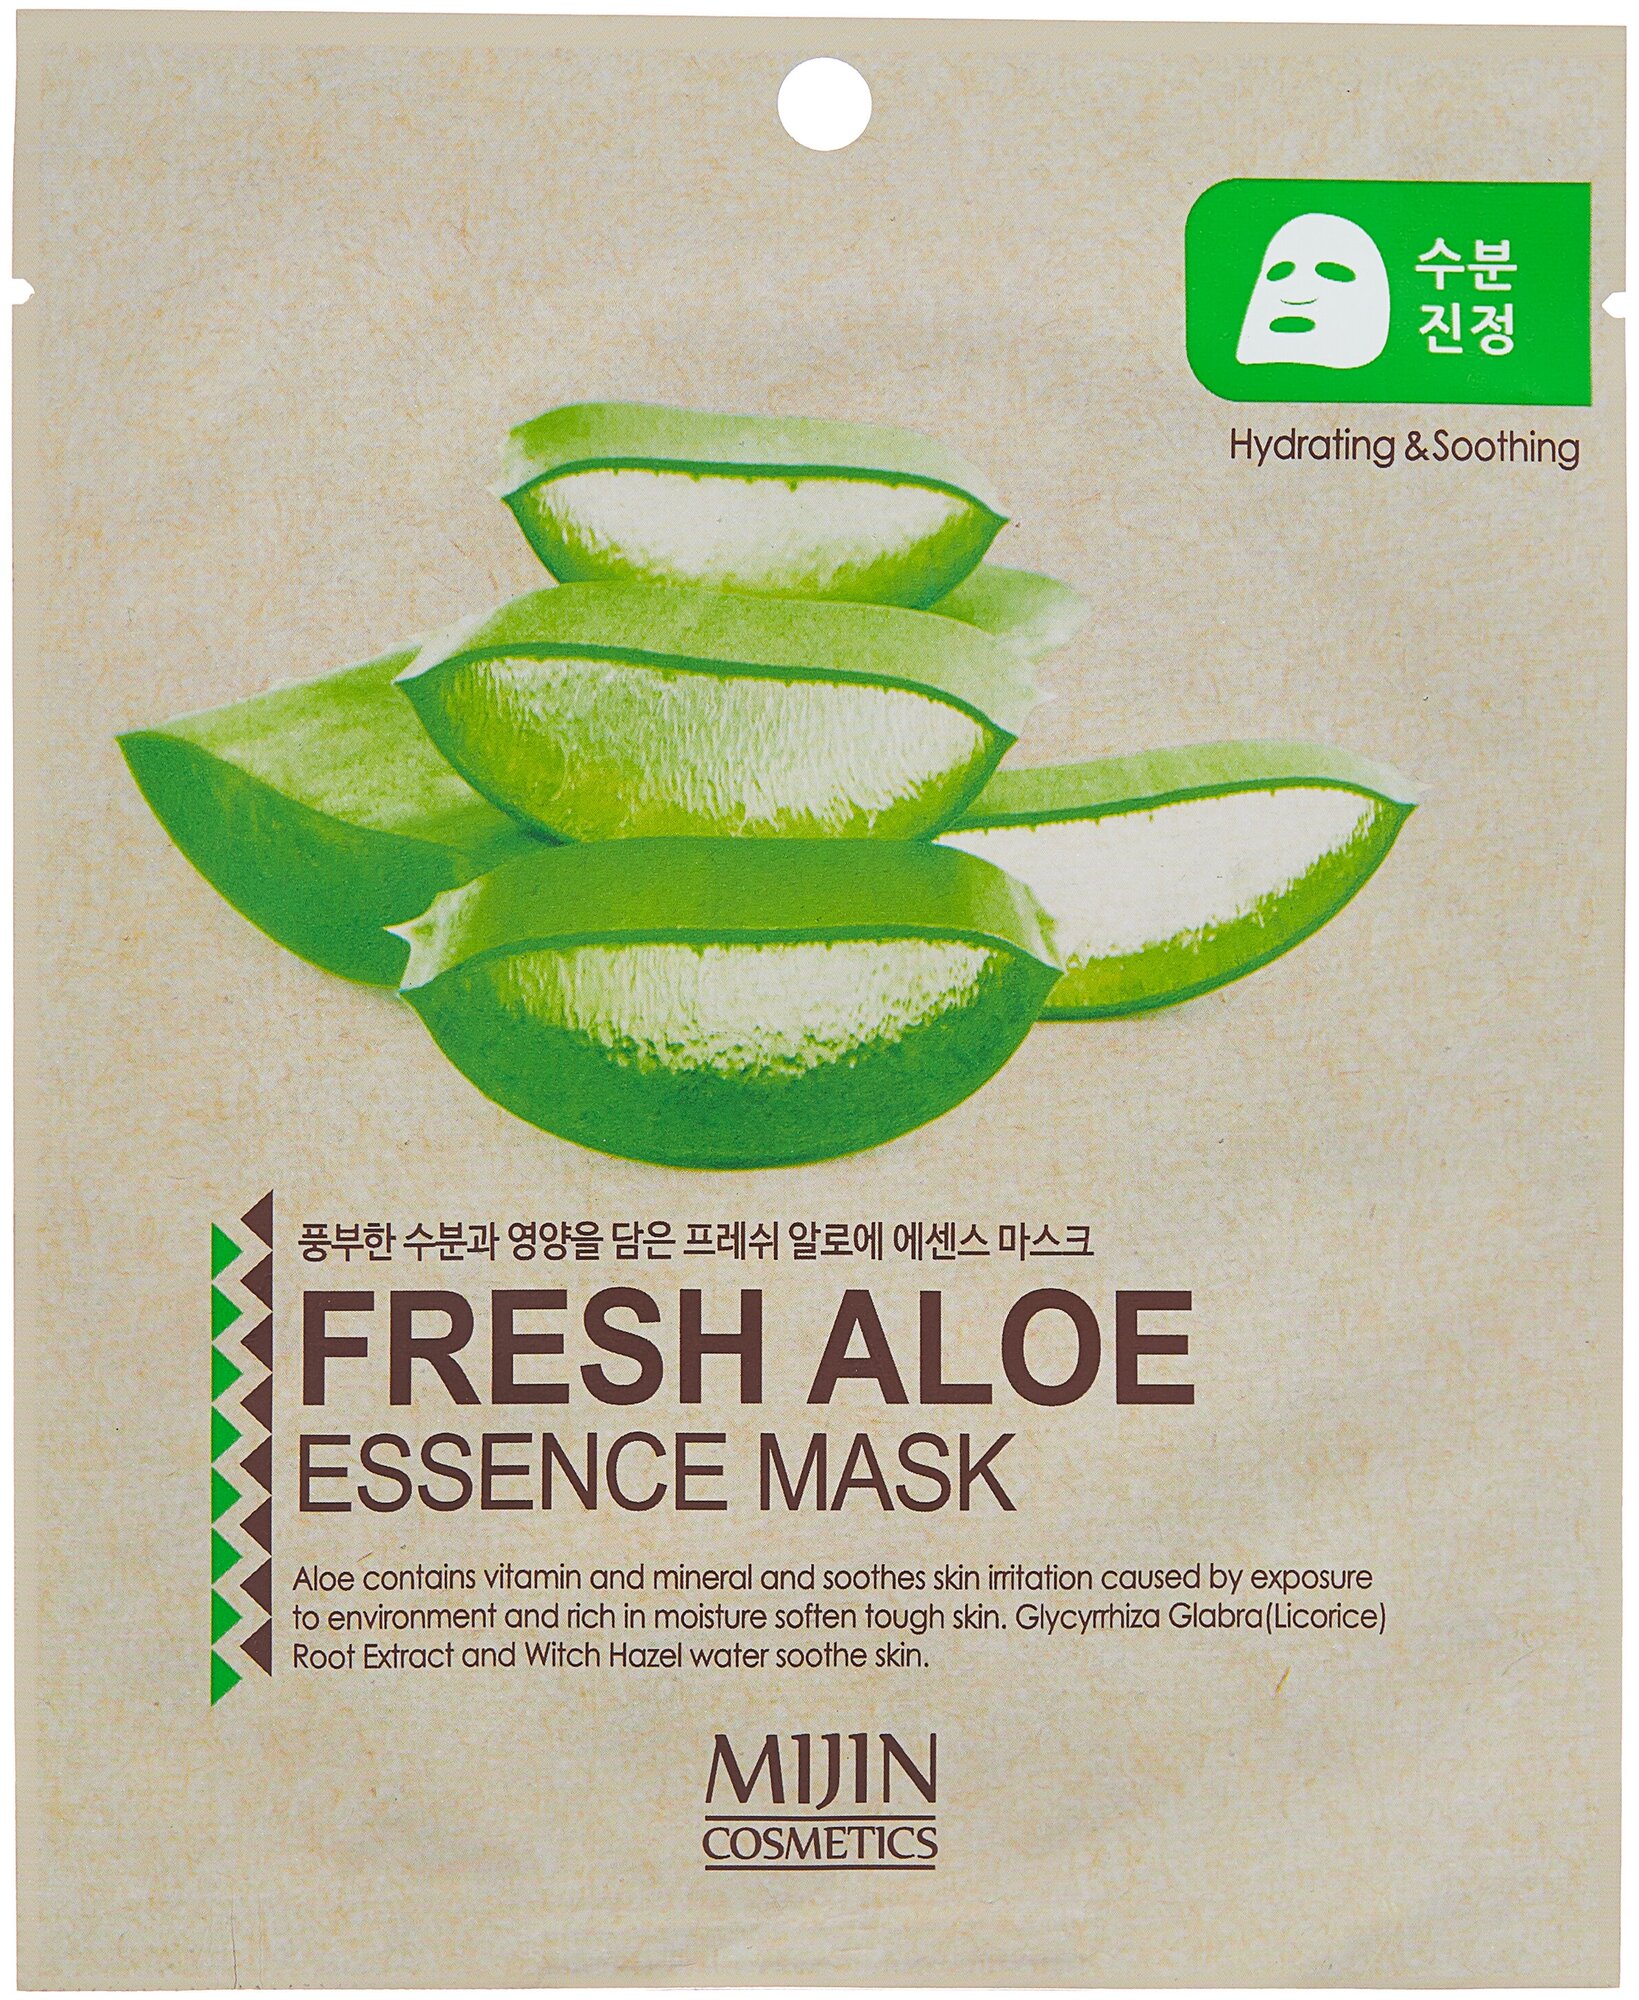 Тканевая маска для лица Mijin Essence Mask Fresh Aloe, 25 гр.